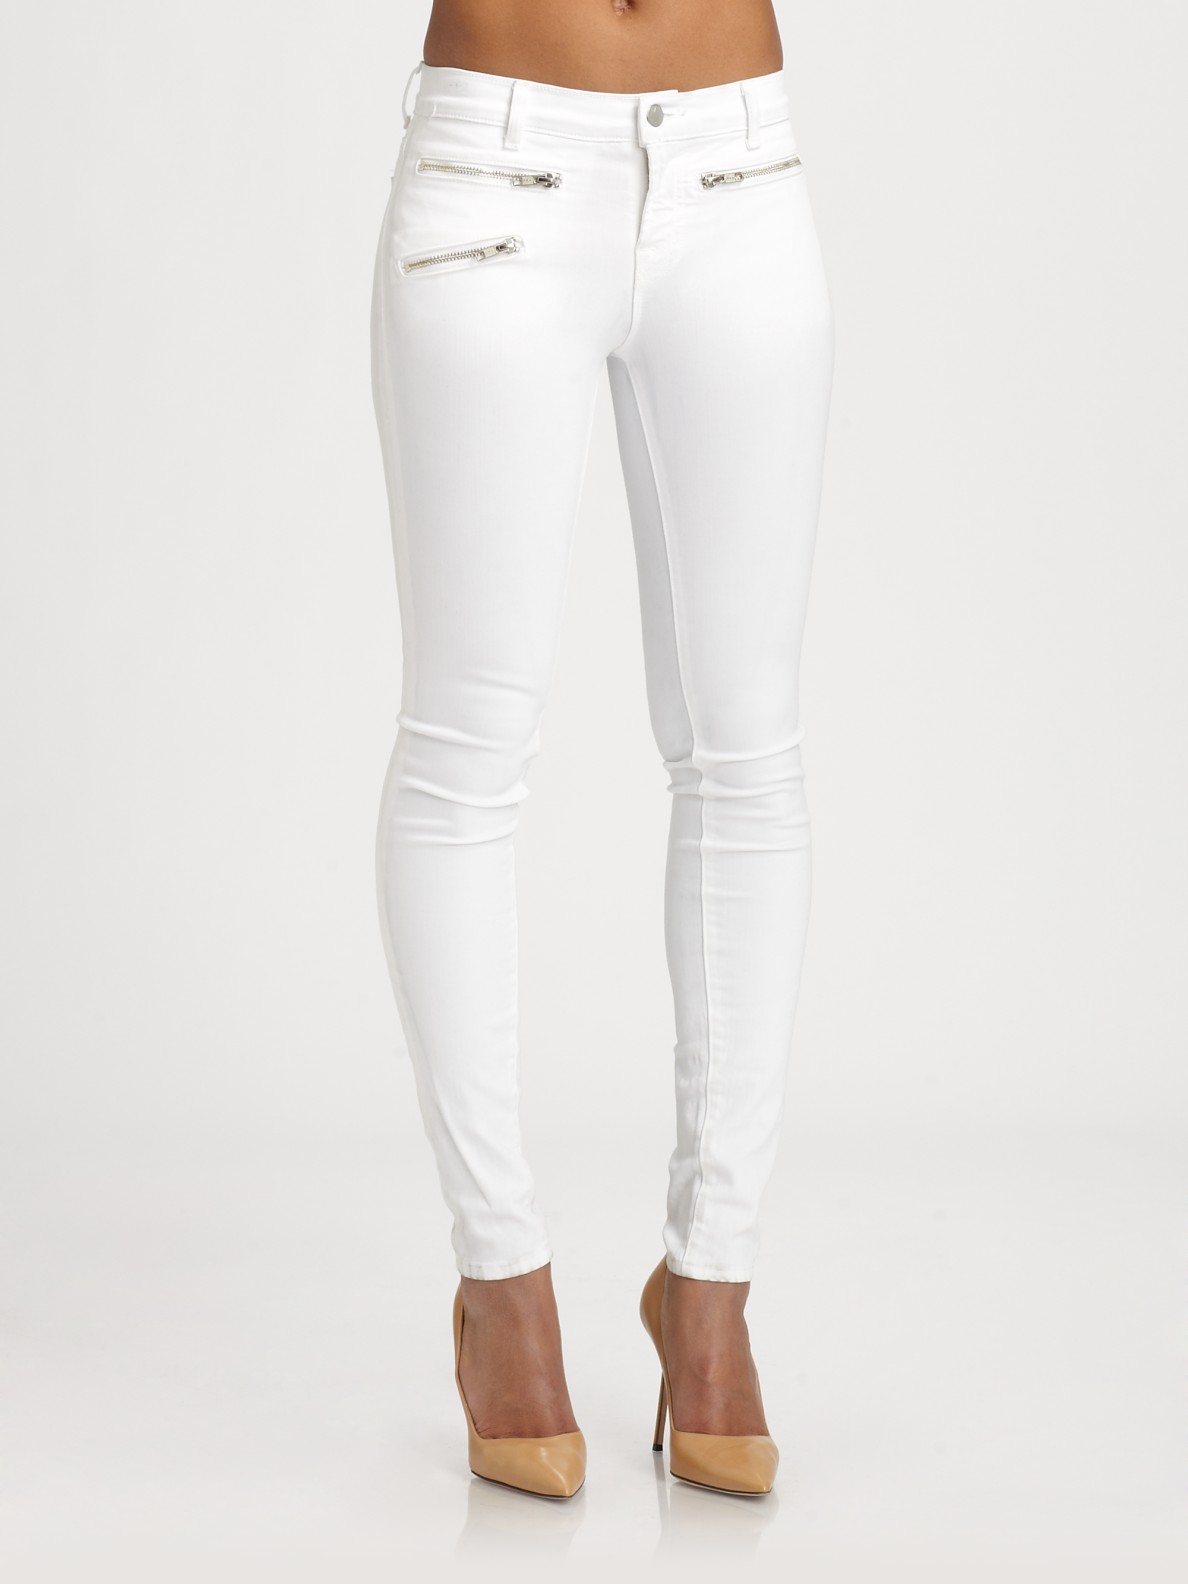 J Brand 821 Zoe Zipper Skinny Jeans in White - Lyst1188 x 1584